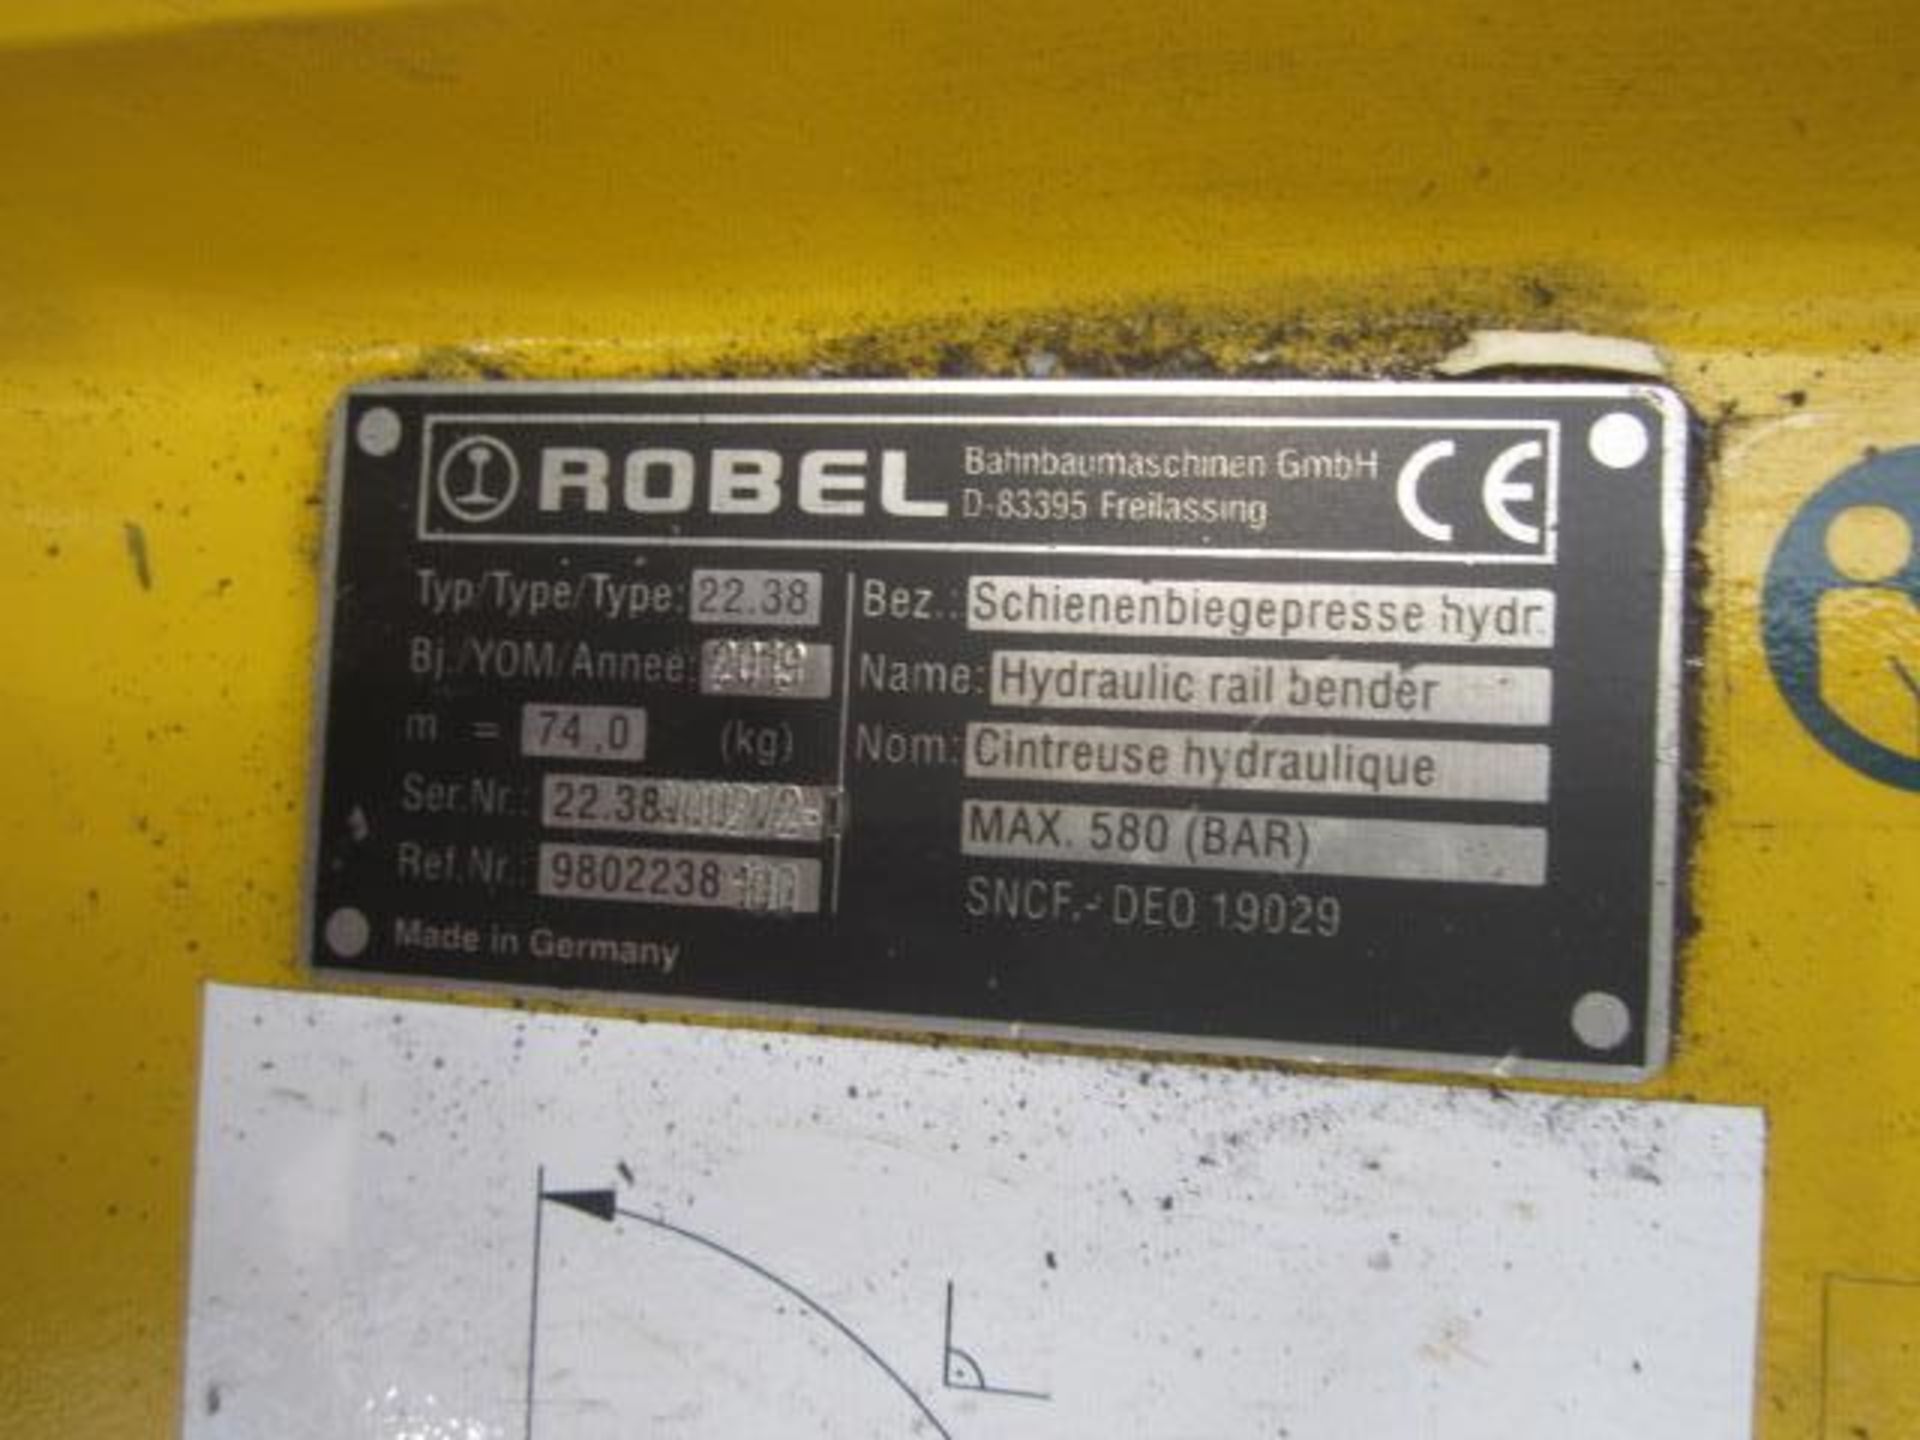 Robel hydraulic rail bender, type 22.38, serial number 22.380000272, max bar 580 (2019) - Image 3 of 4